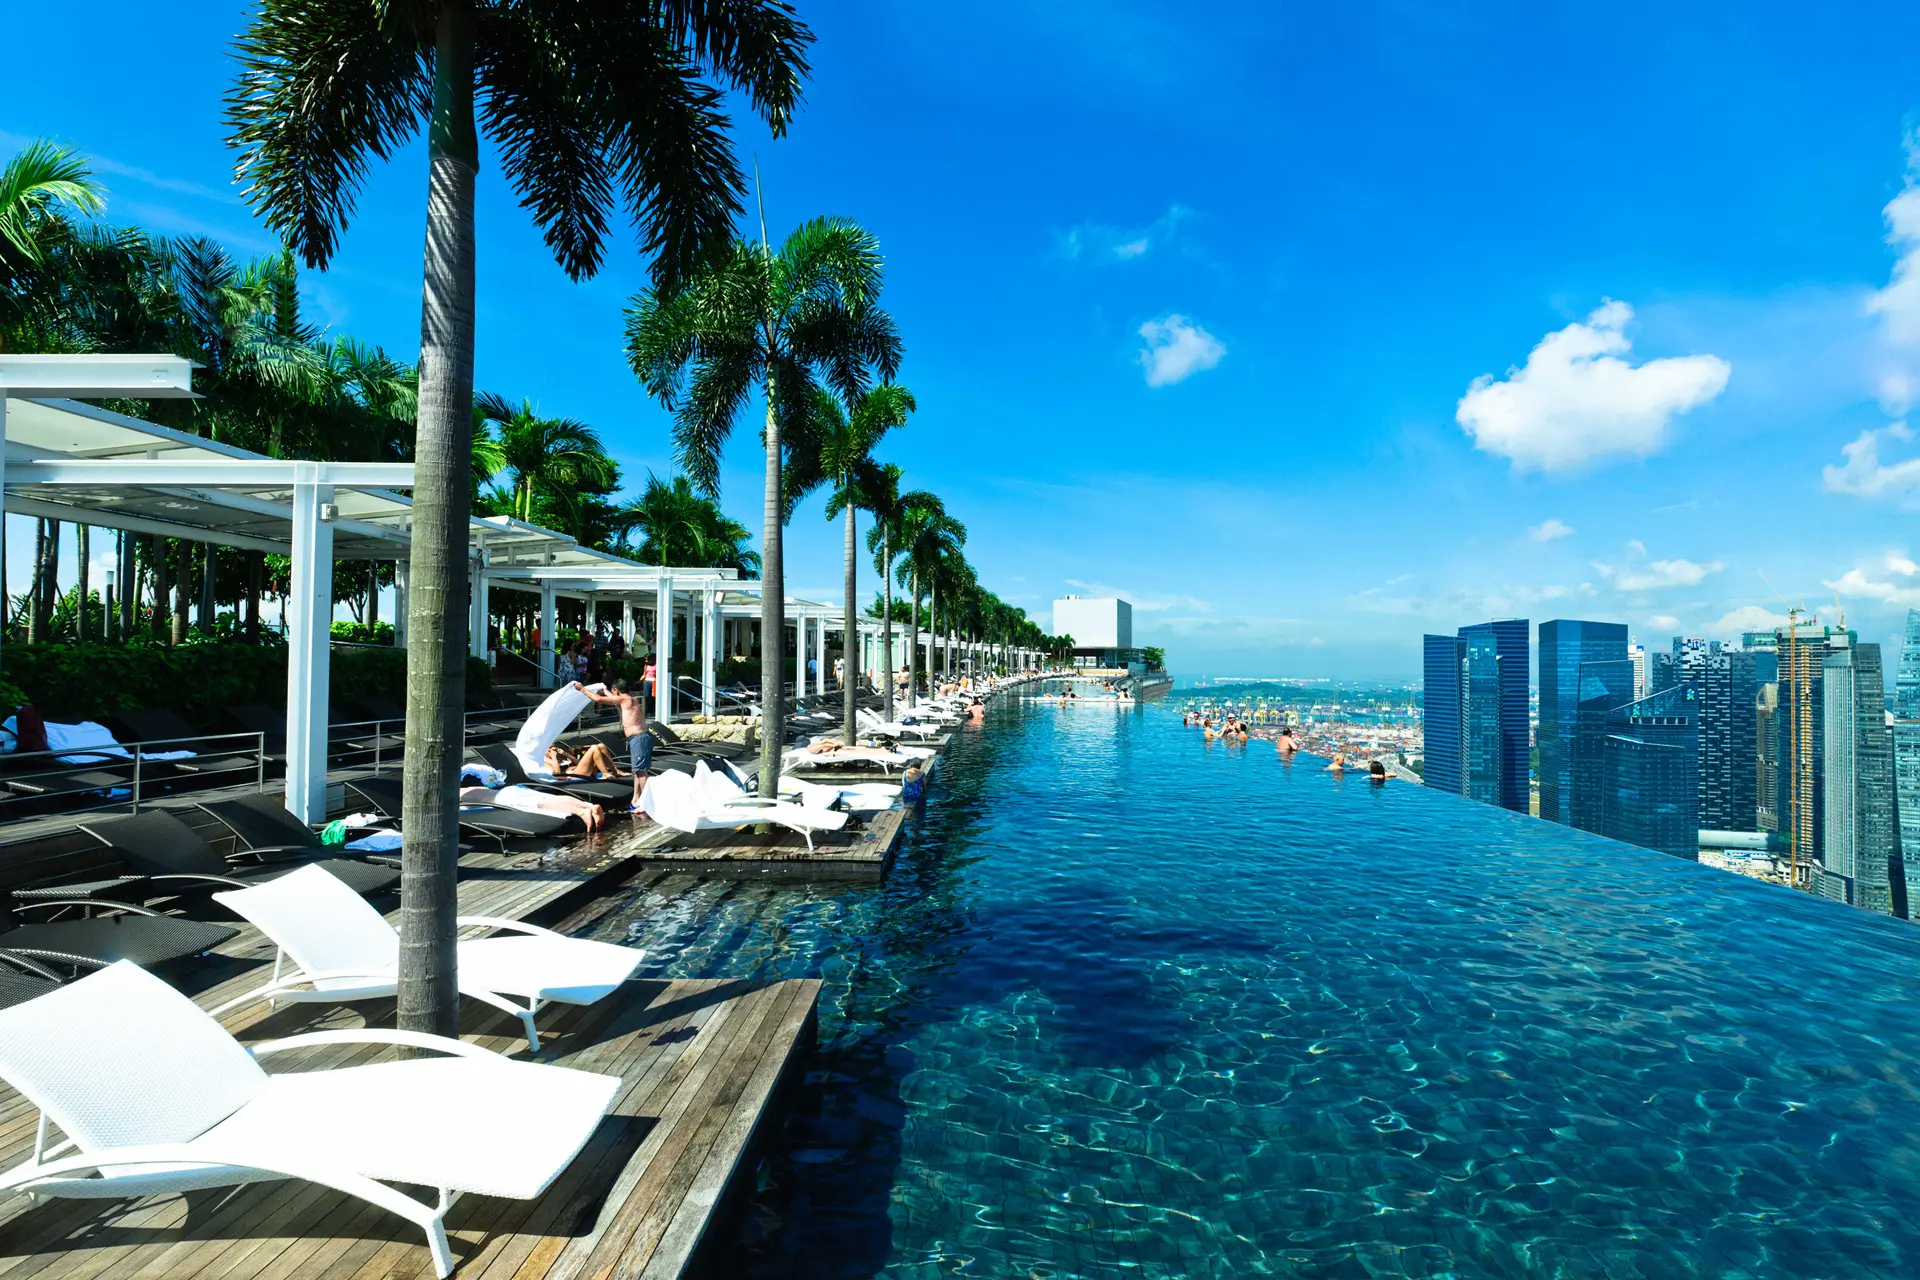 Hotel review Service & Facilities' - Marina Bay Sands - 1